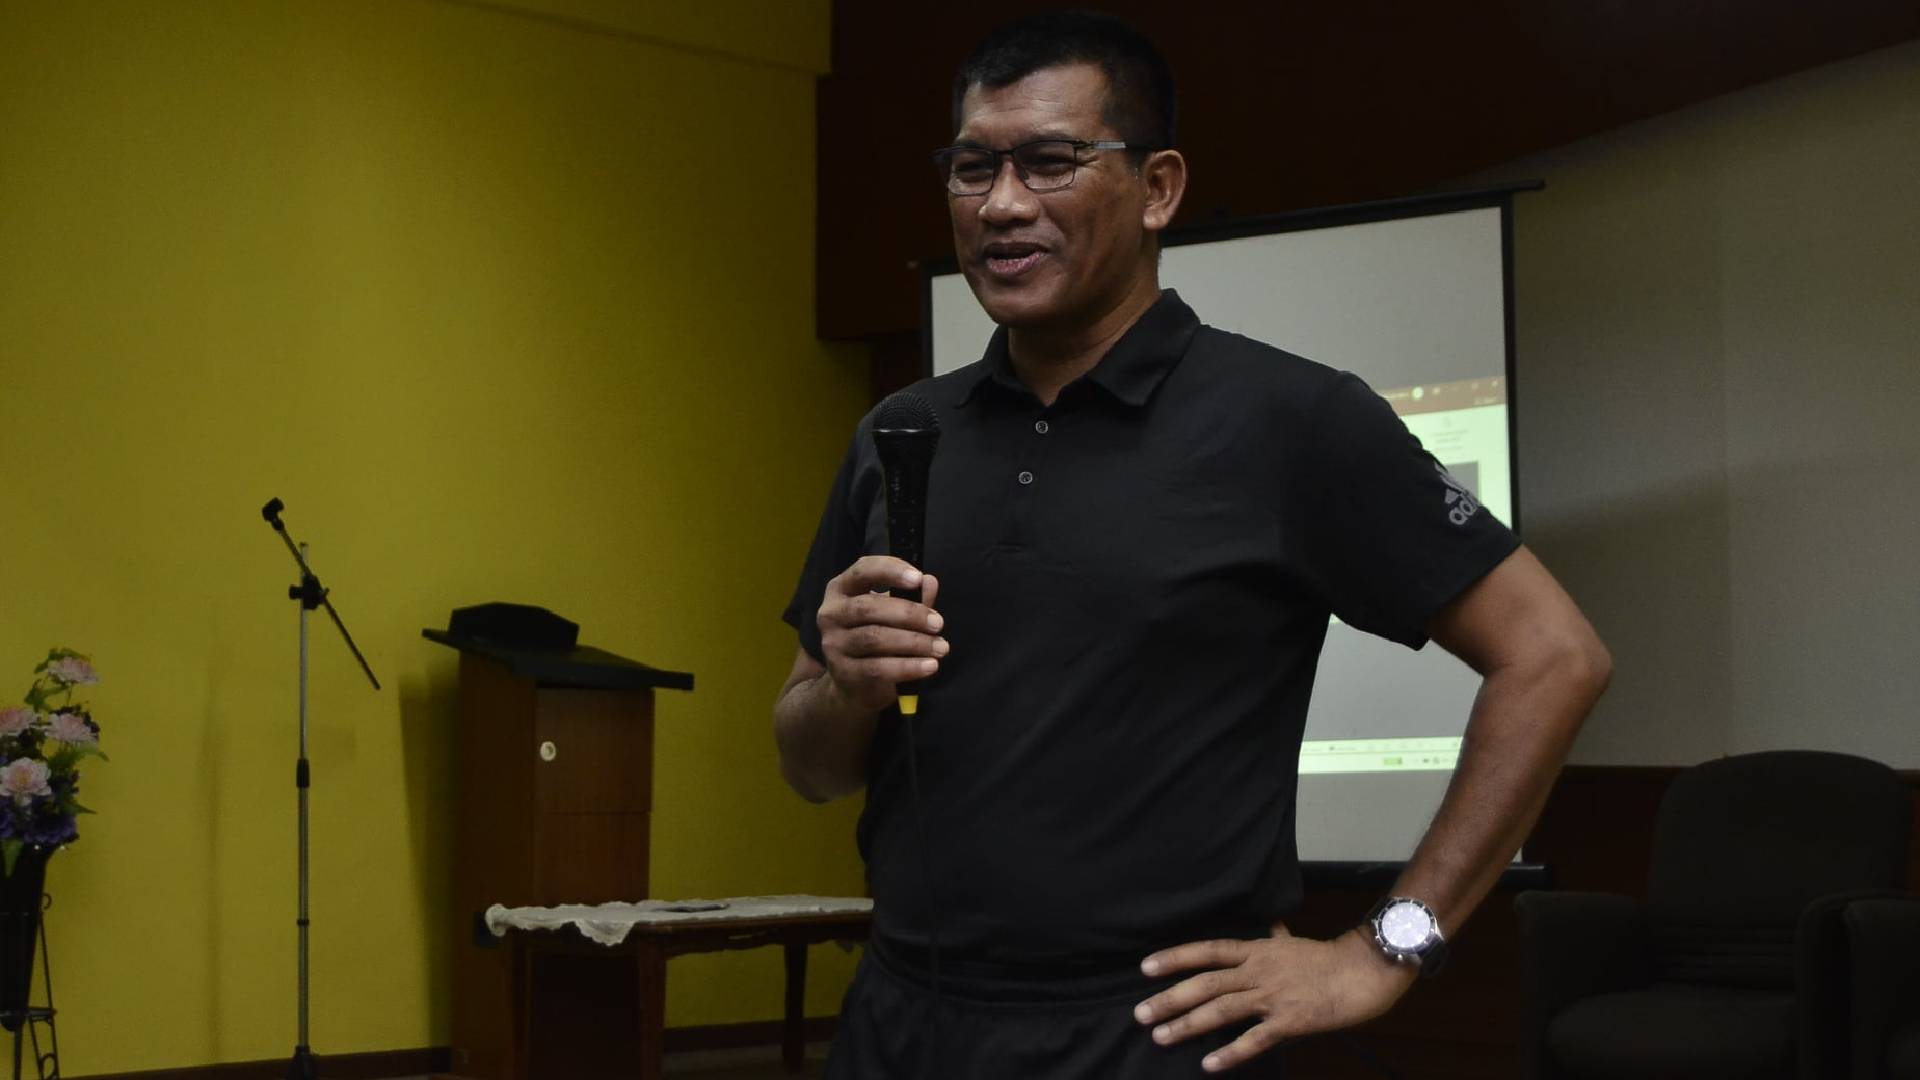 Subkhiddin Mohd Salleh 1 "Saya Tak Dibenarkan Singgung Liga Malaysia" - Subkhiddin